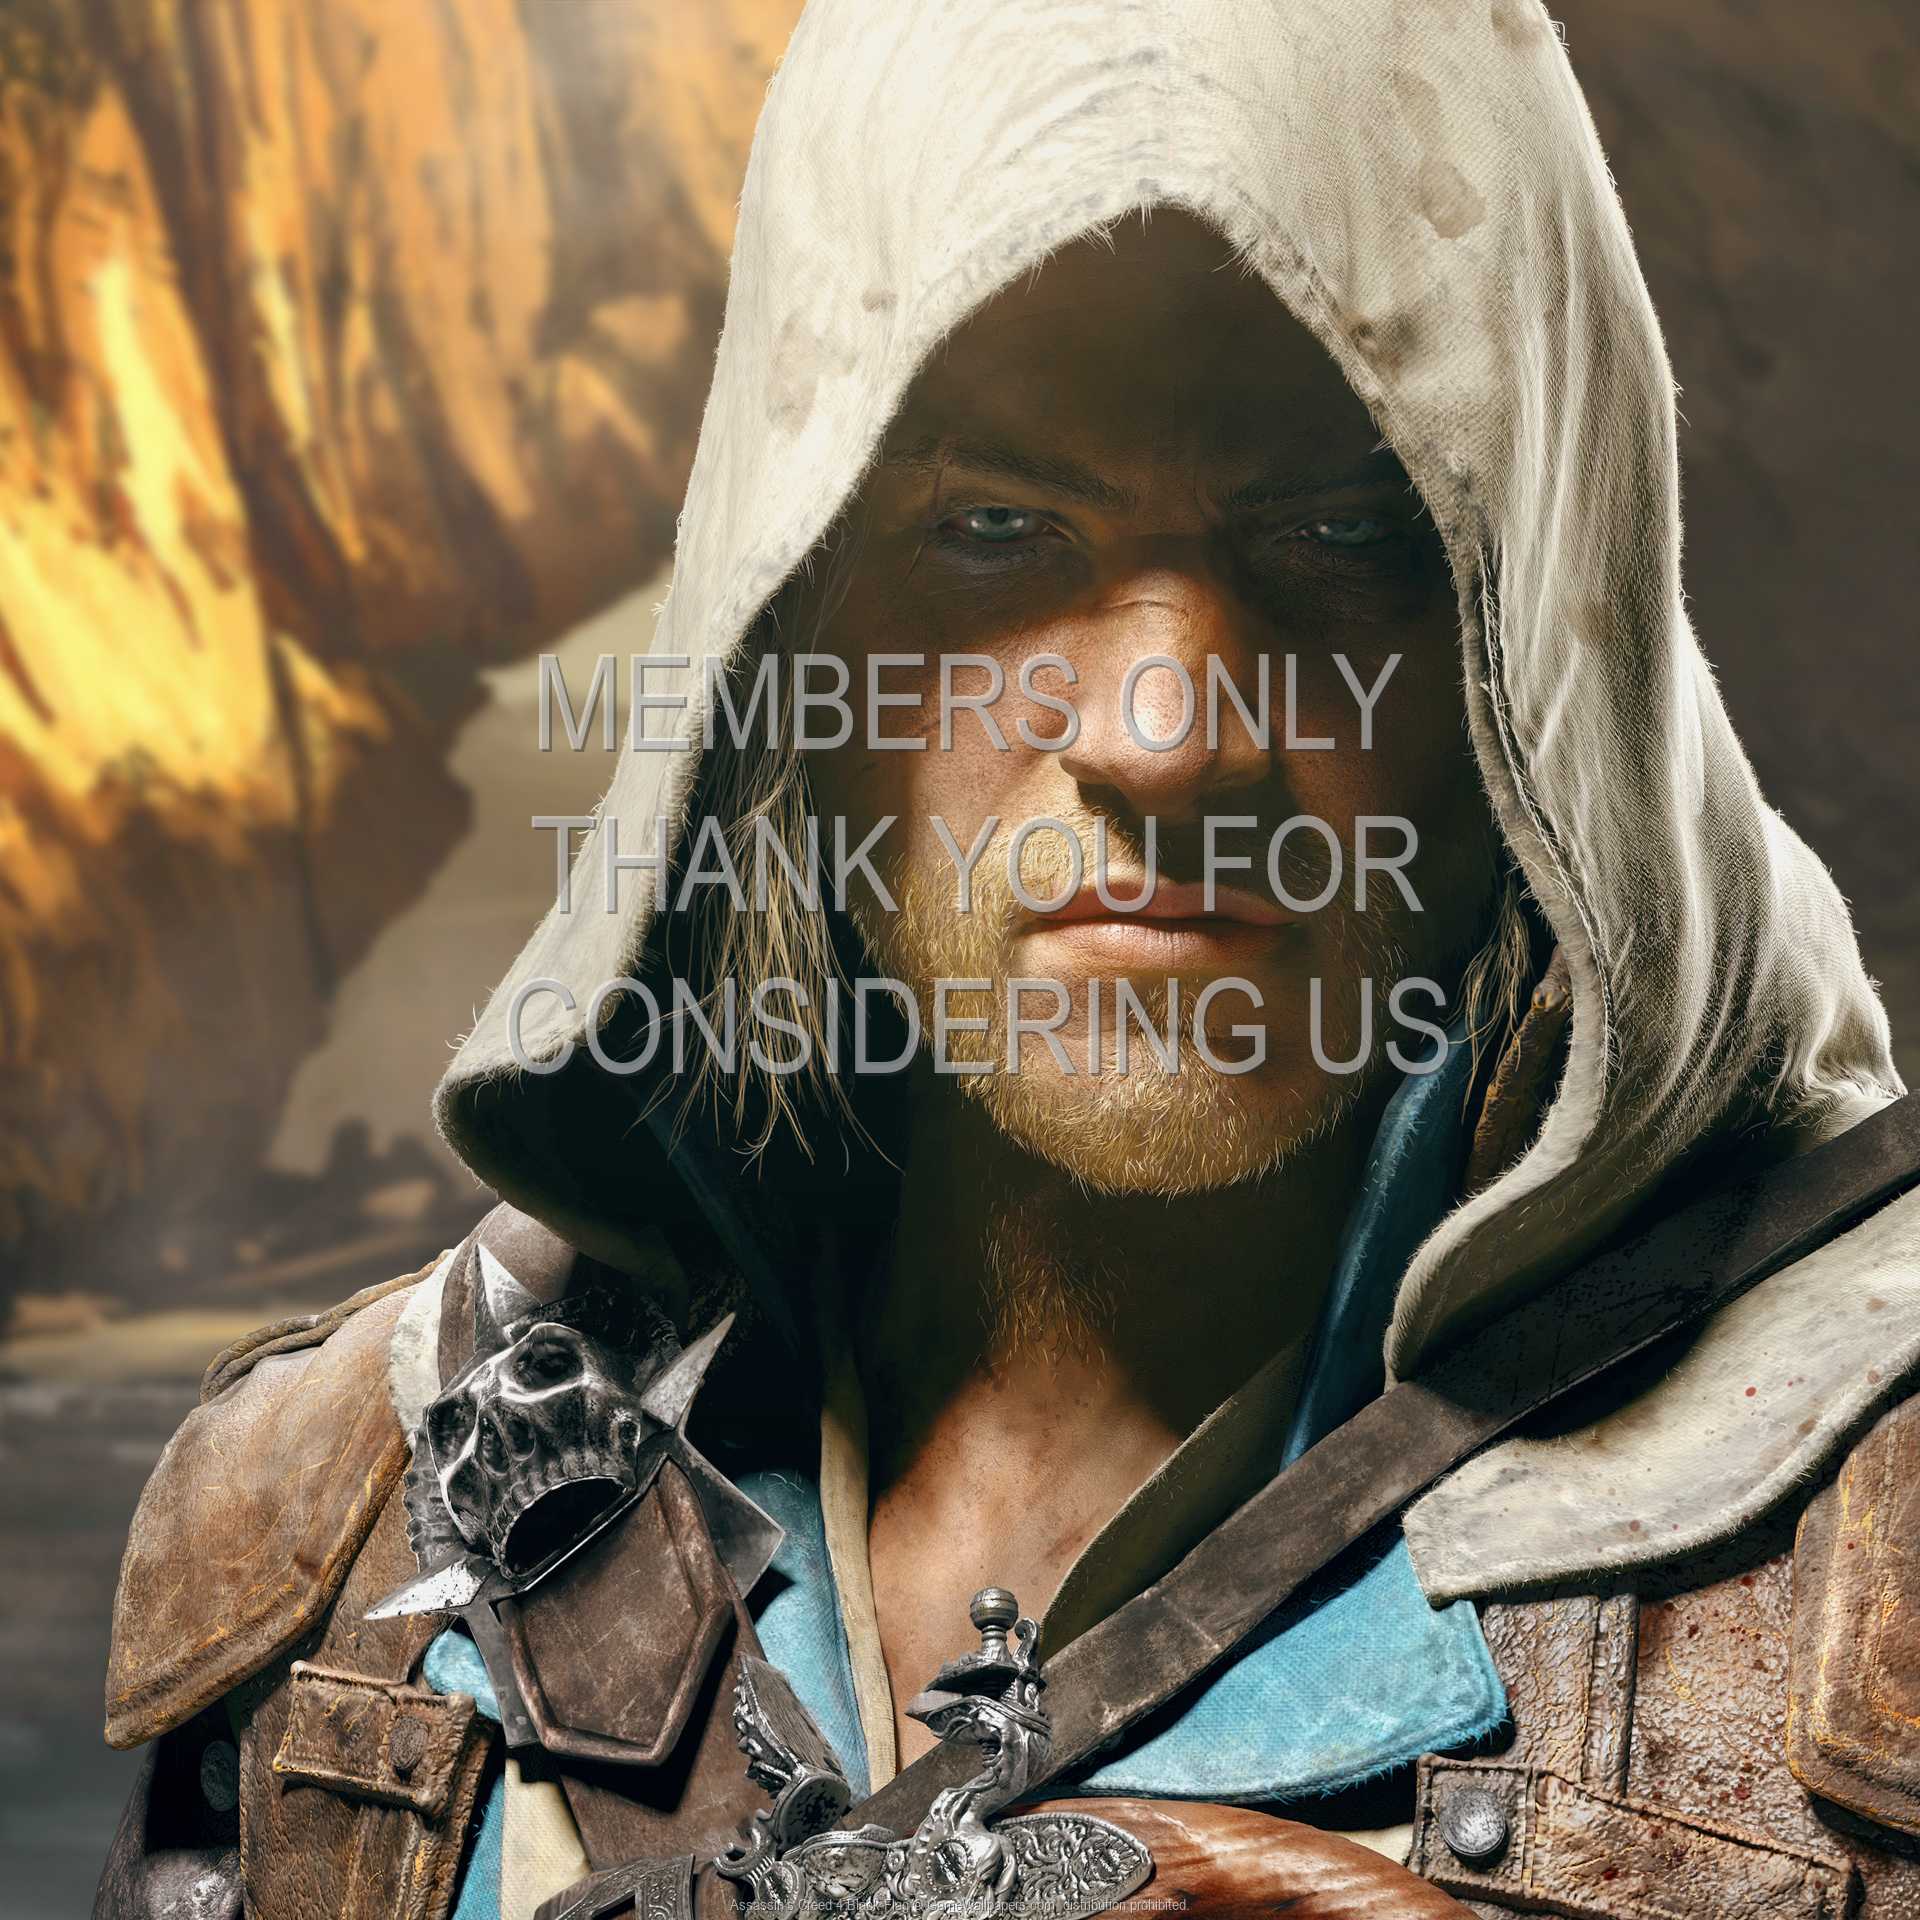 Assassin's Creed 4: Black Flag 1080p Horizontal Mobile wallpaper or background 12